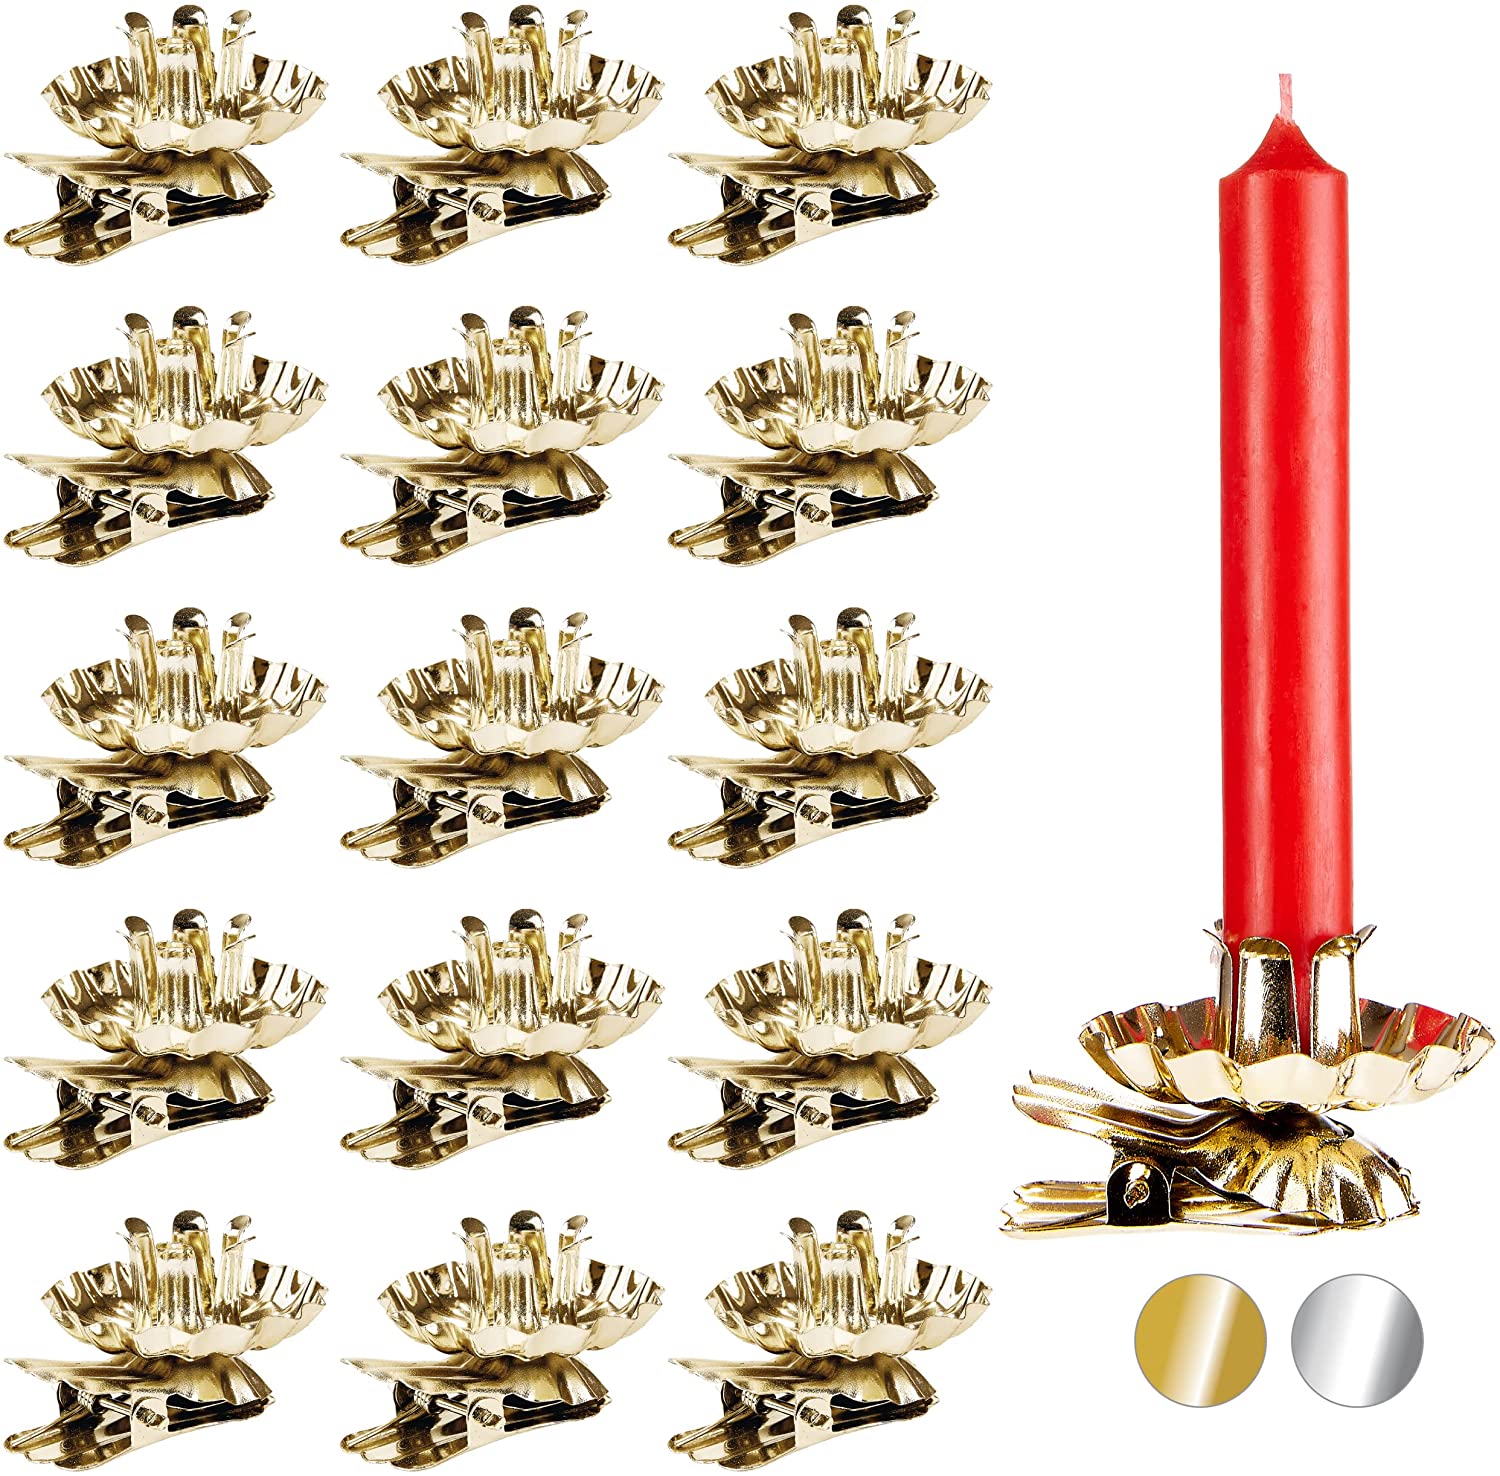 Baumkerzenhalter 16 Vintage Clips in Gold mit 40 Kerzen in rot